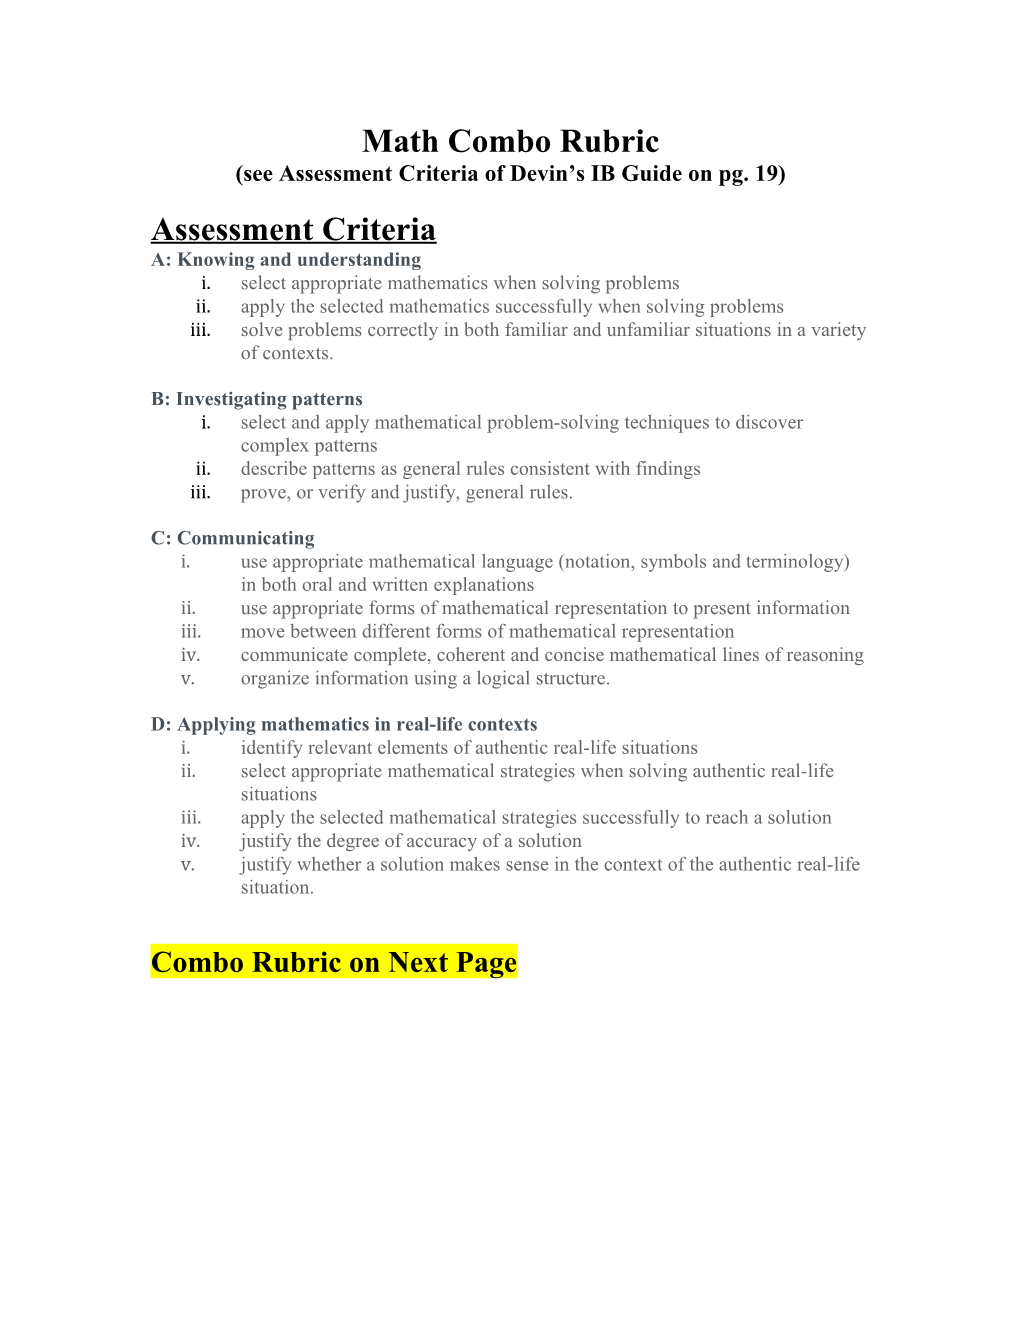 Seeassessment Criteria of Devin S IB Guide on Pg. 19